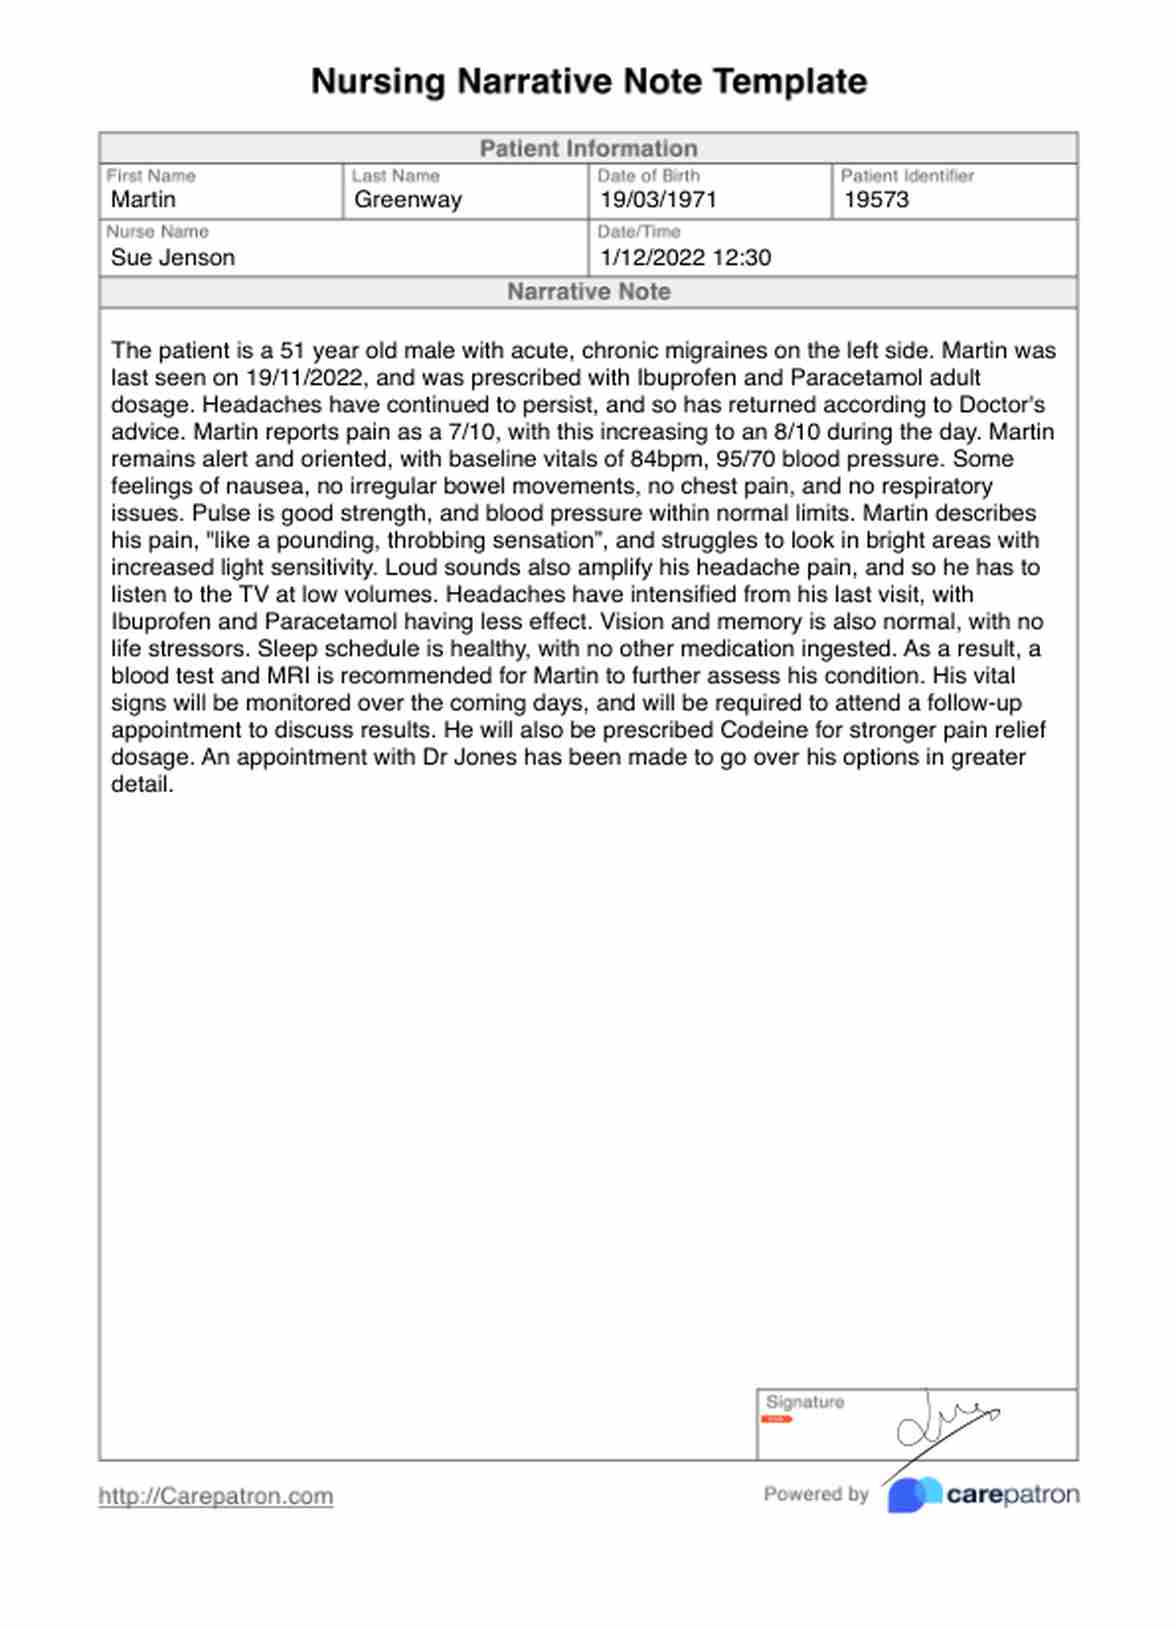 Plantilla de Nota narrativa de enfermería PDF Example